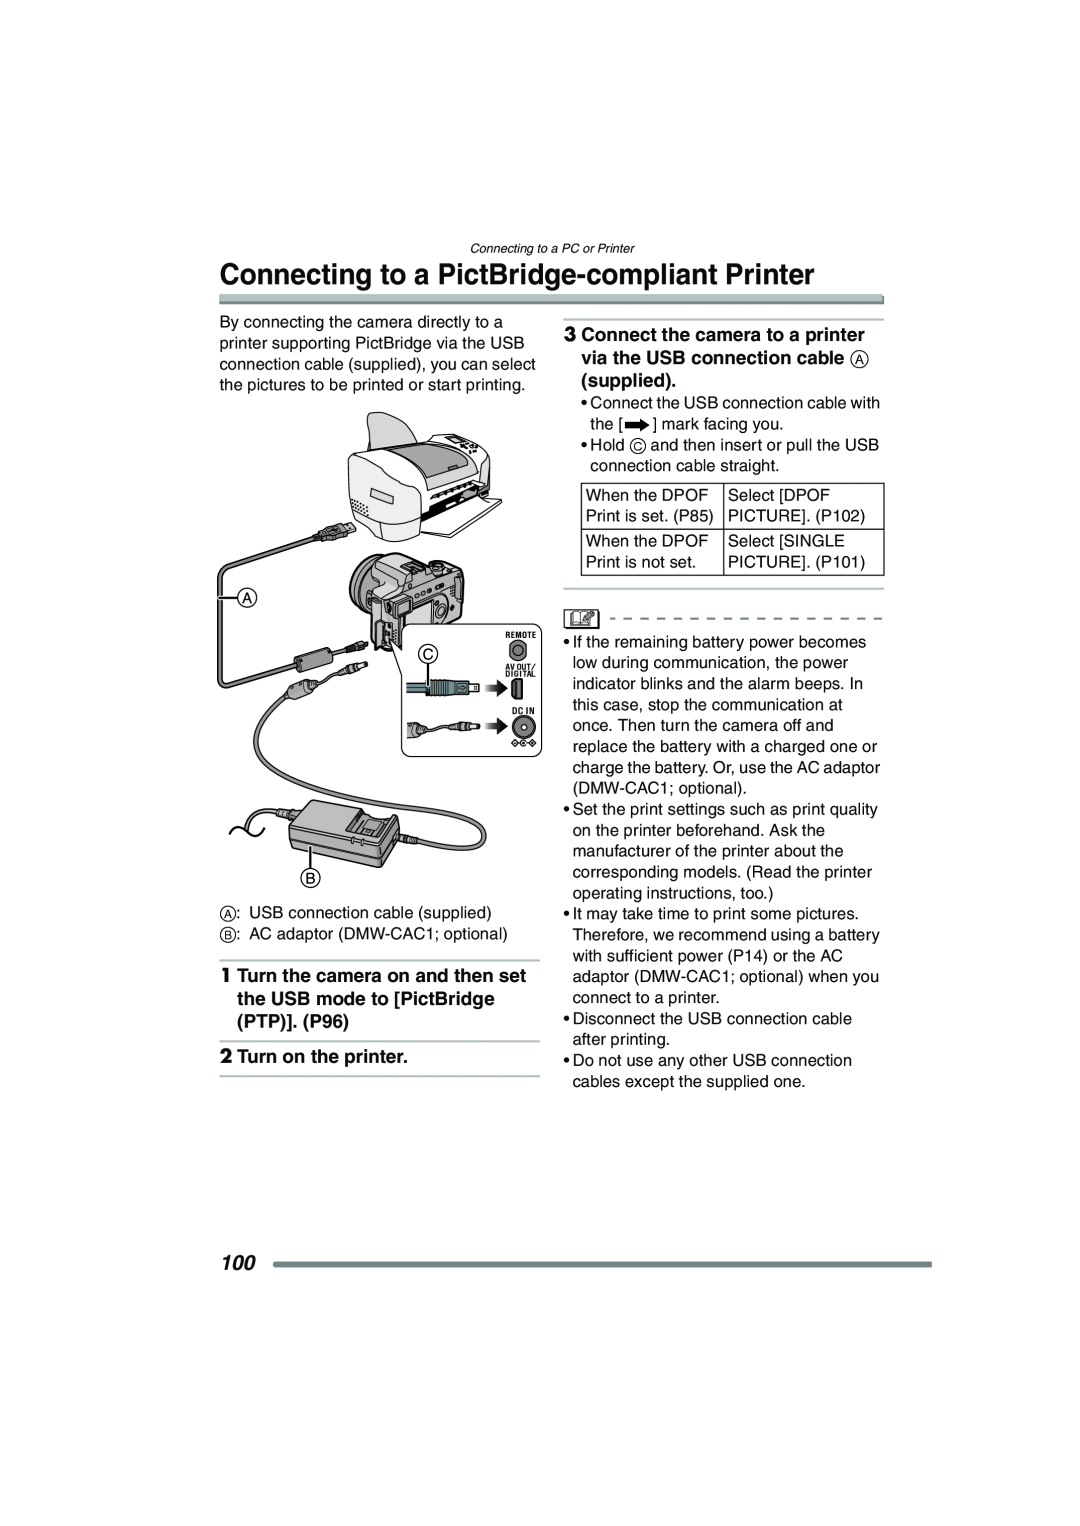 Panasonic DMC-FZ20PP operating instructions Connecting to a PictBridge-compliant Printer, Turn on the printer 